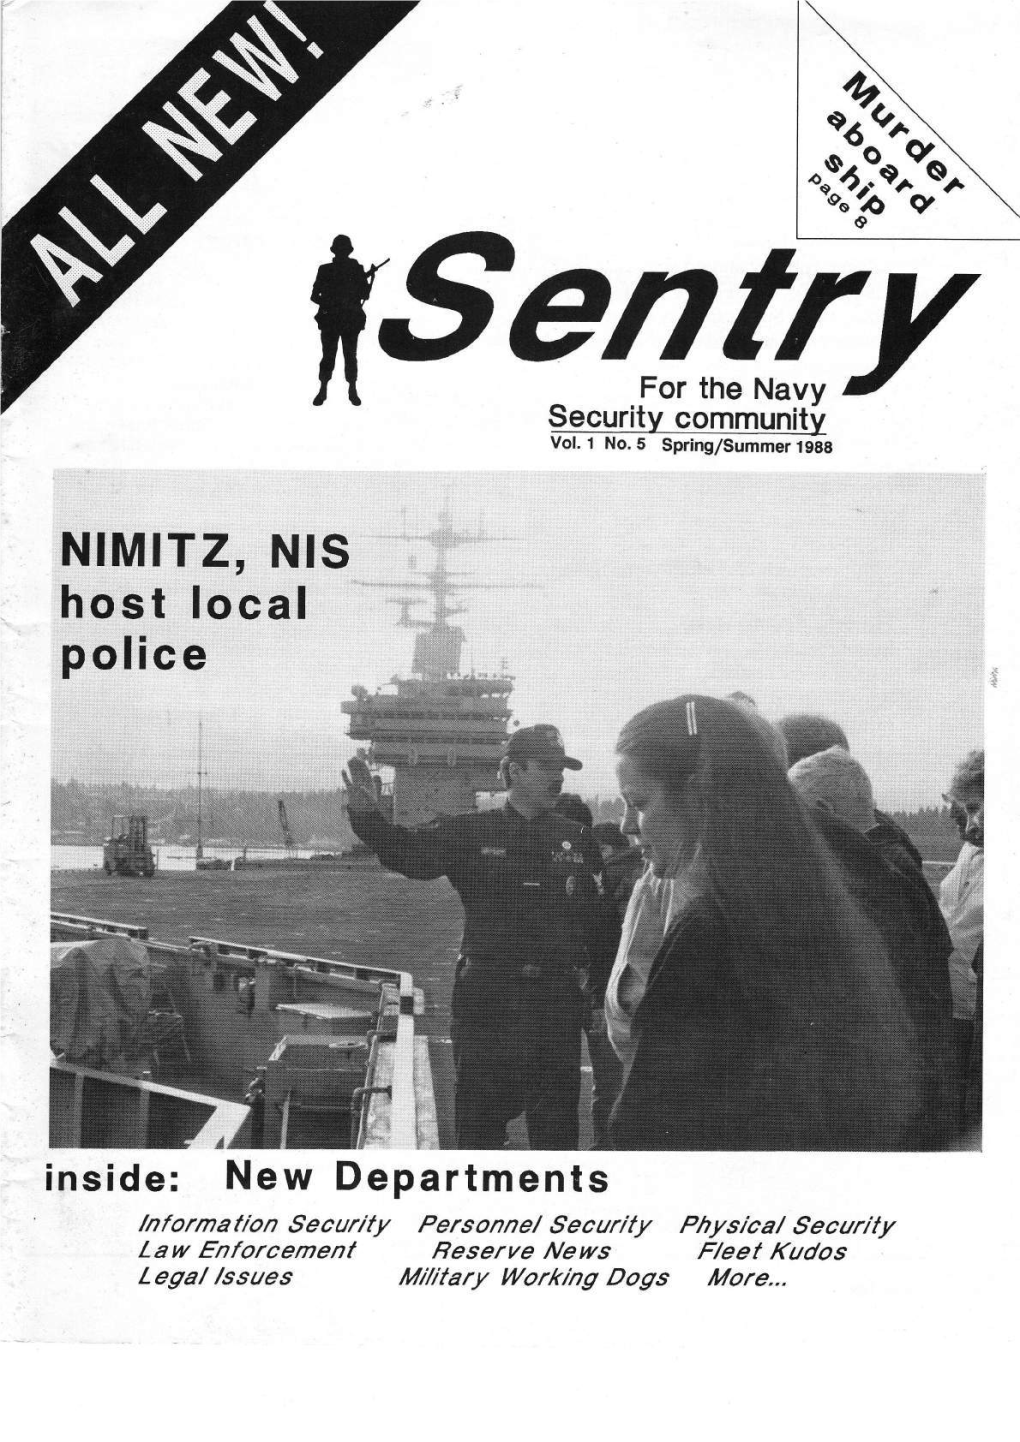 Sentry Magazine Vol 1 No 5 Spring